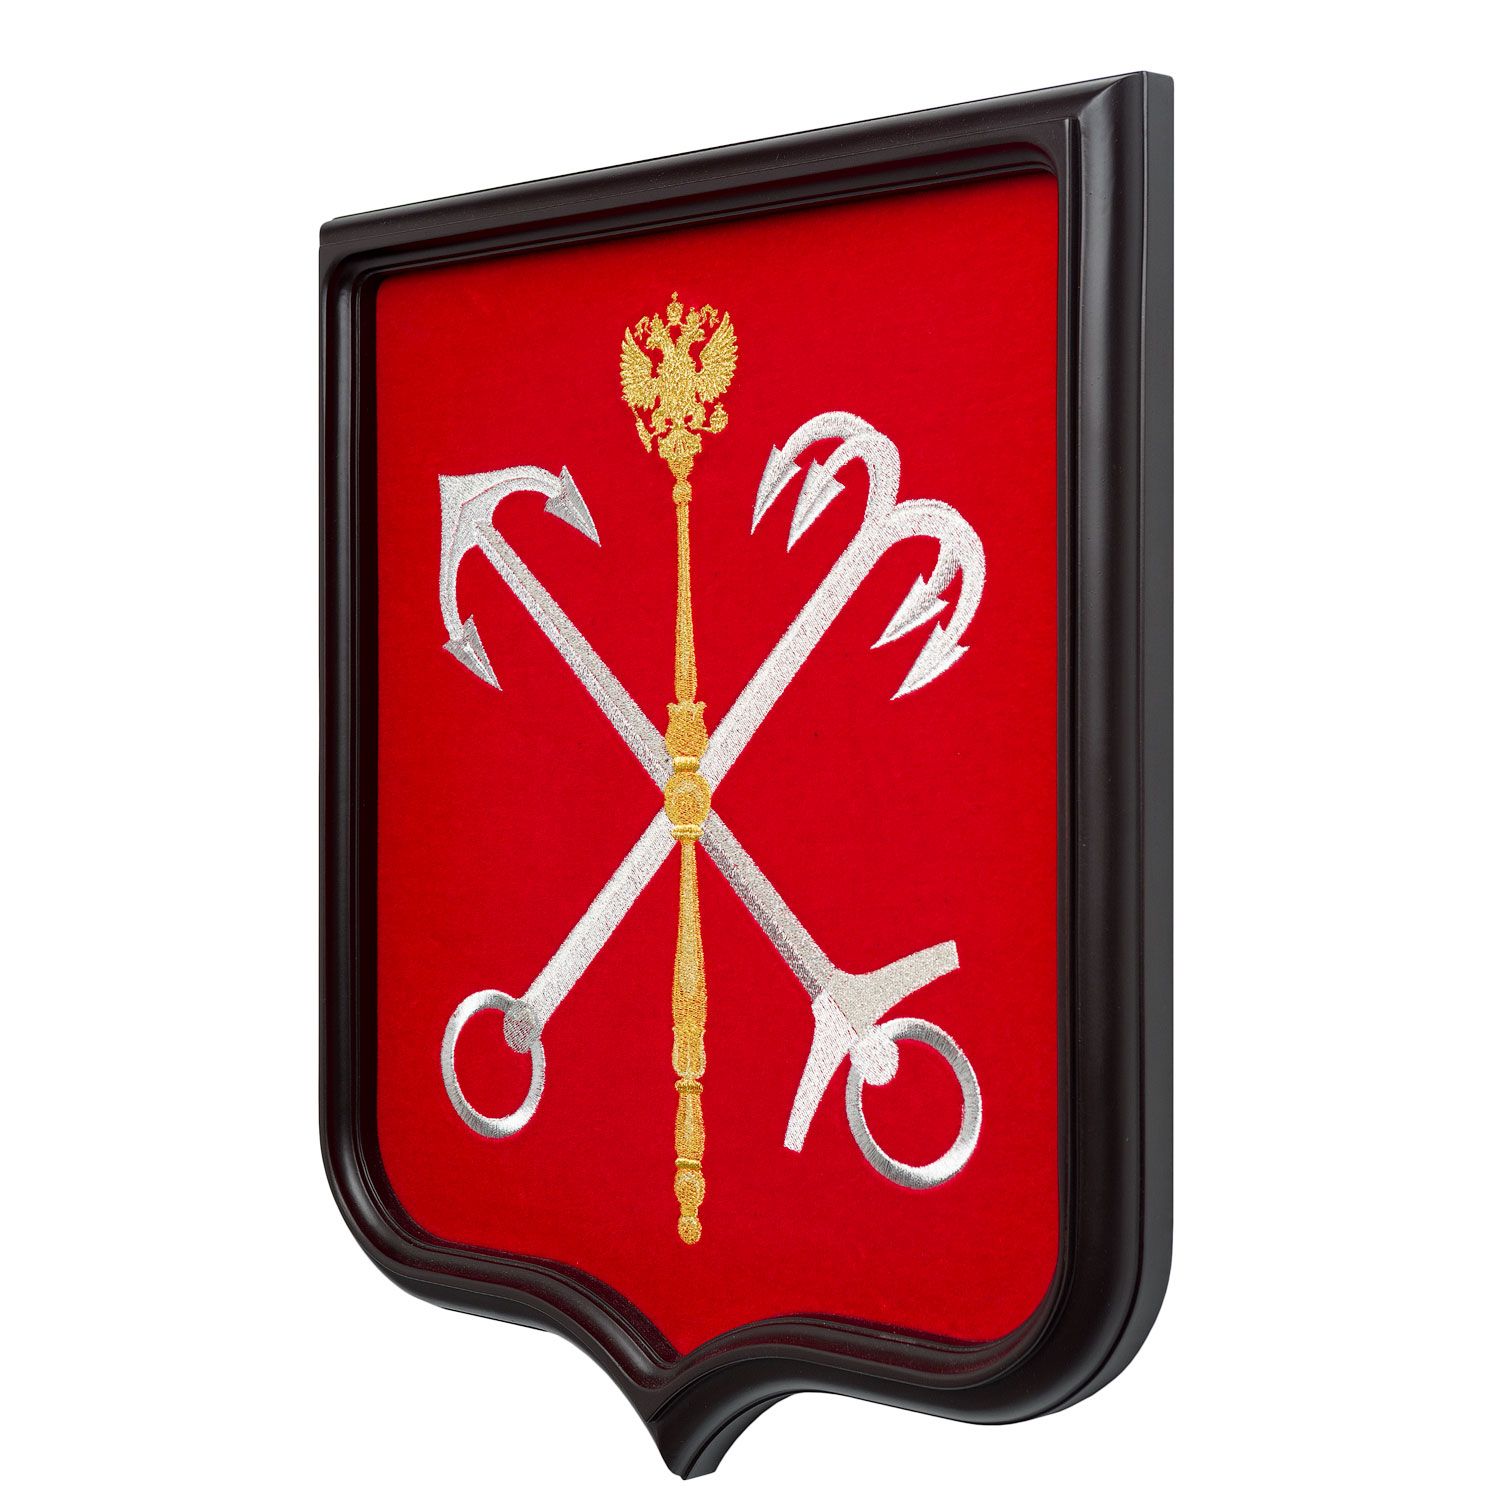 герб санкт петербурга фото